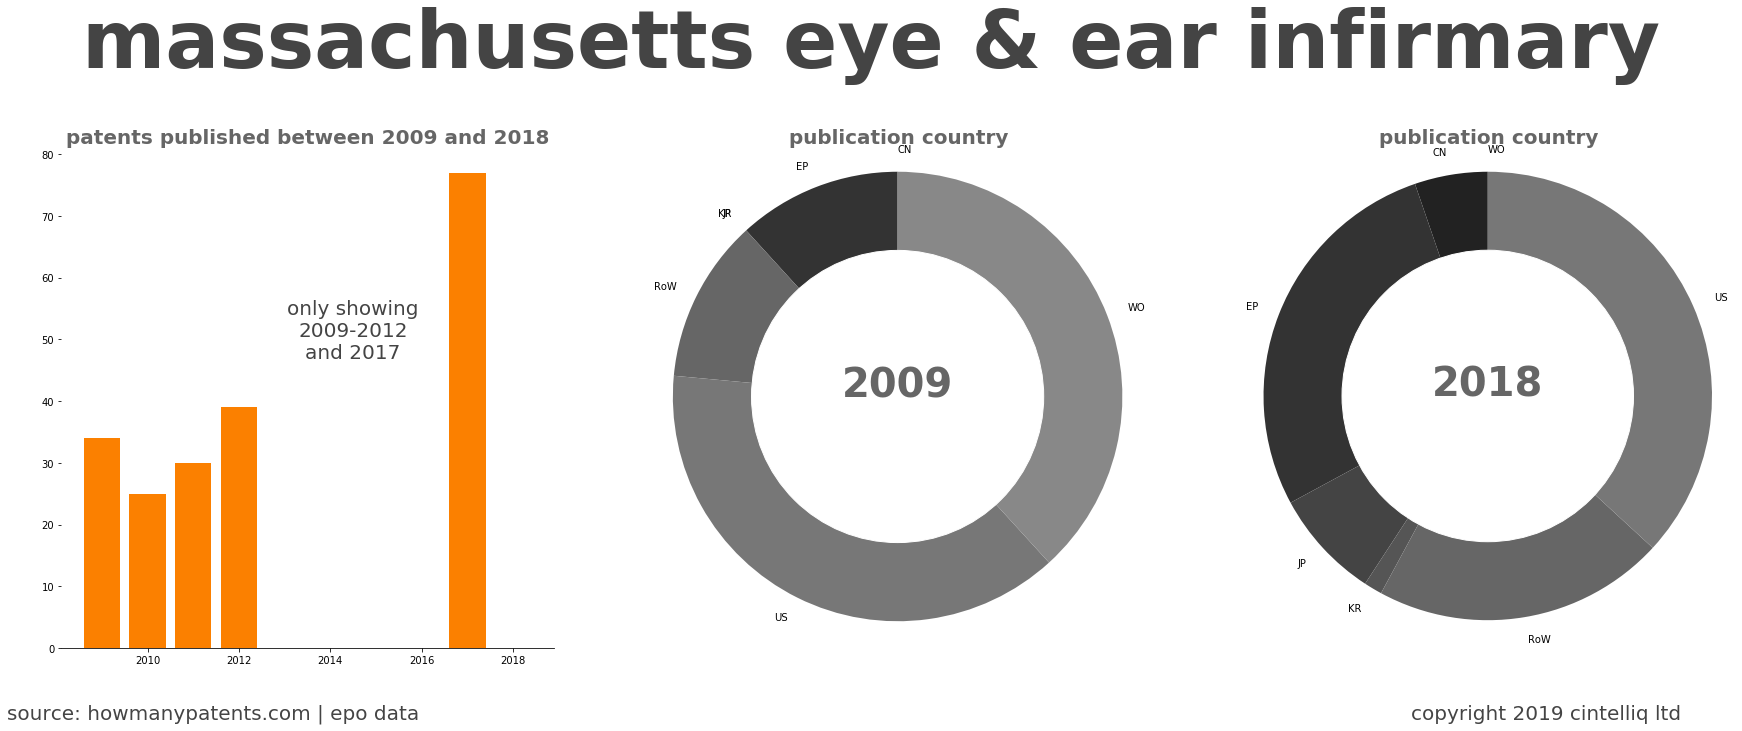 summary of patents for Massachusetts Eye & Ear Infirmary